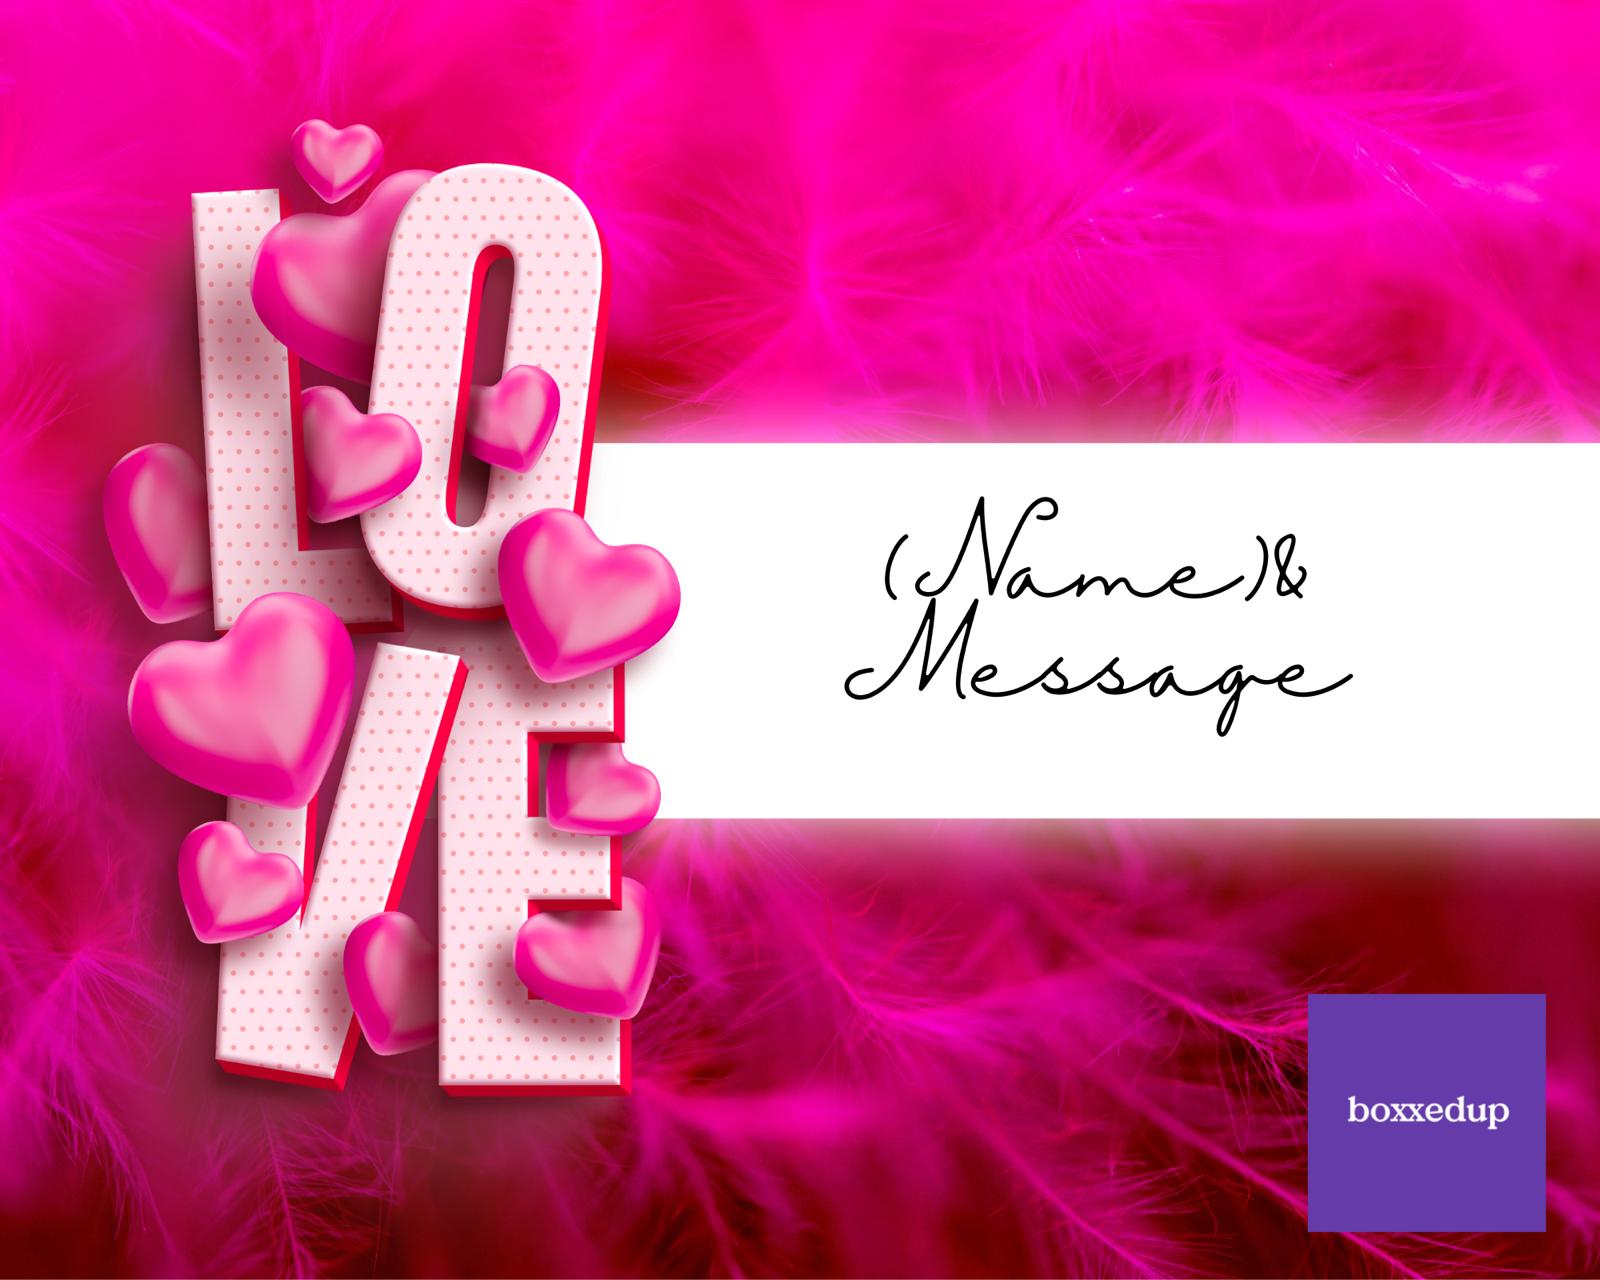 Emma Jones Valentines Home Fragrance Box